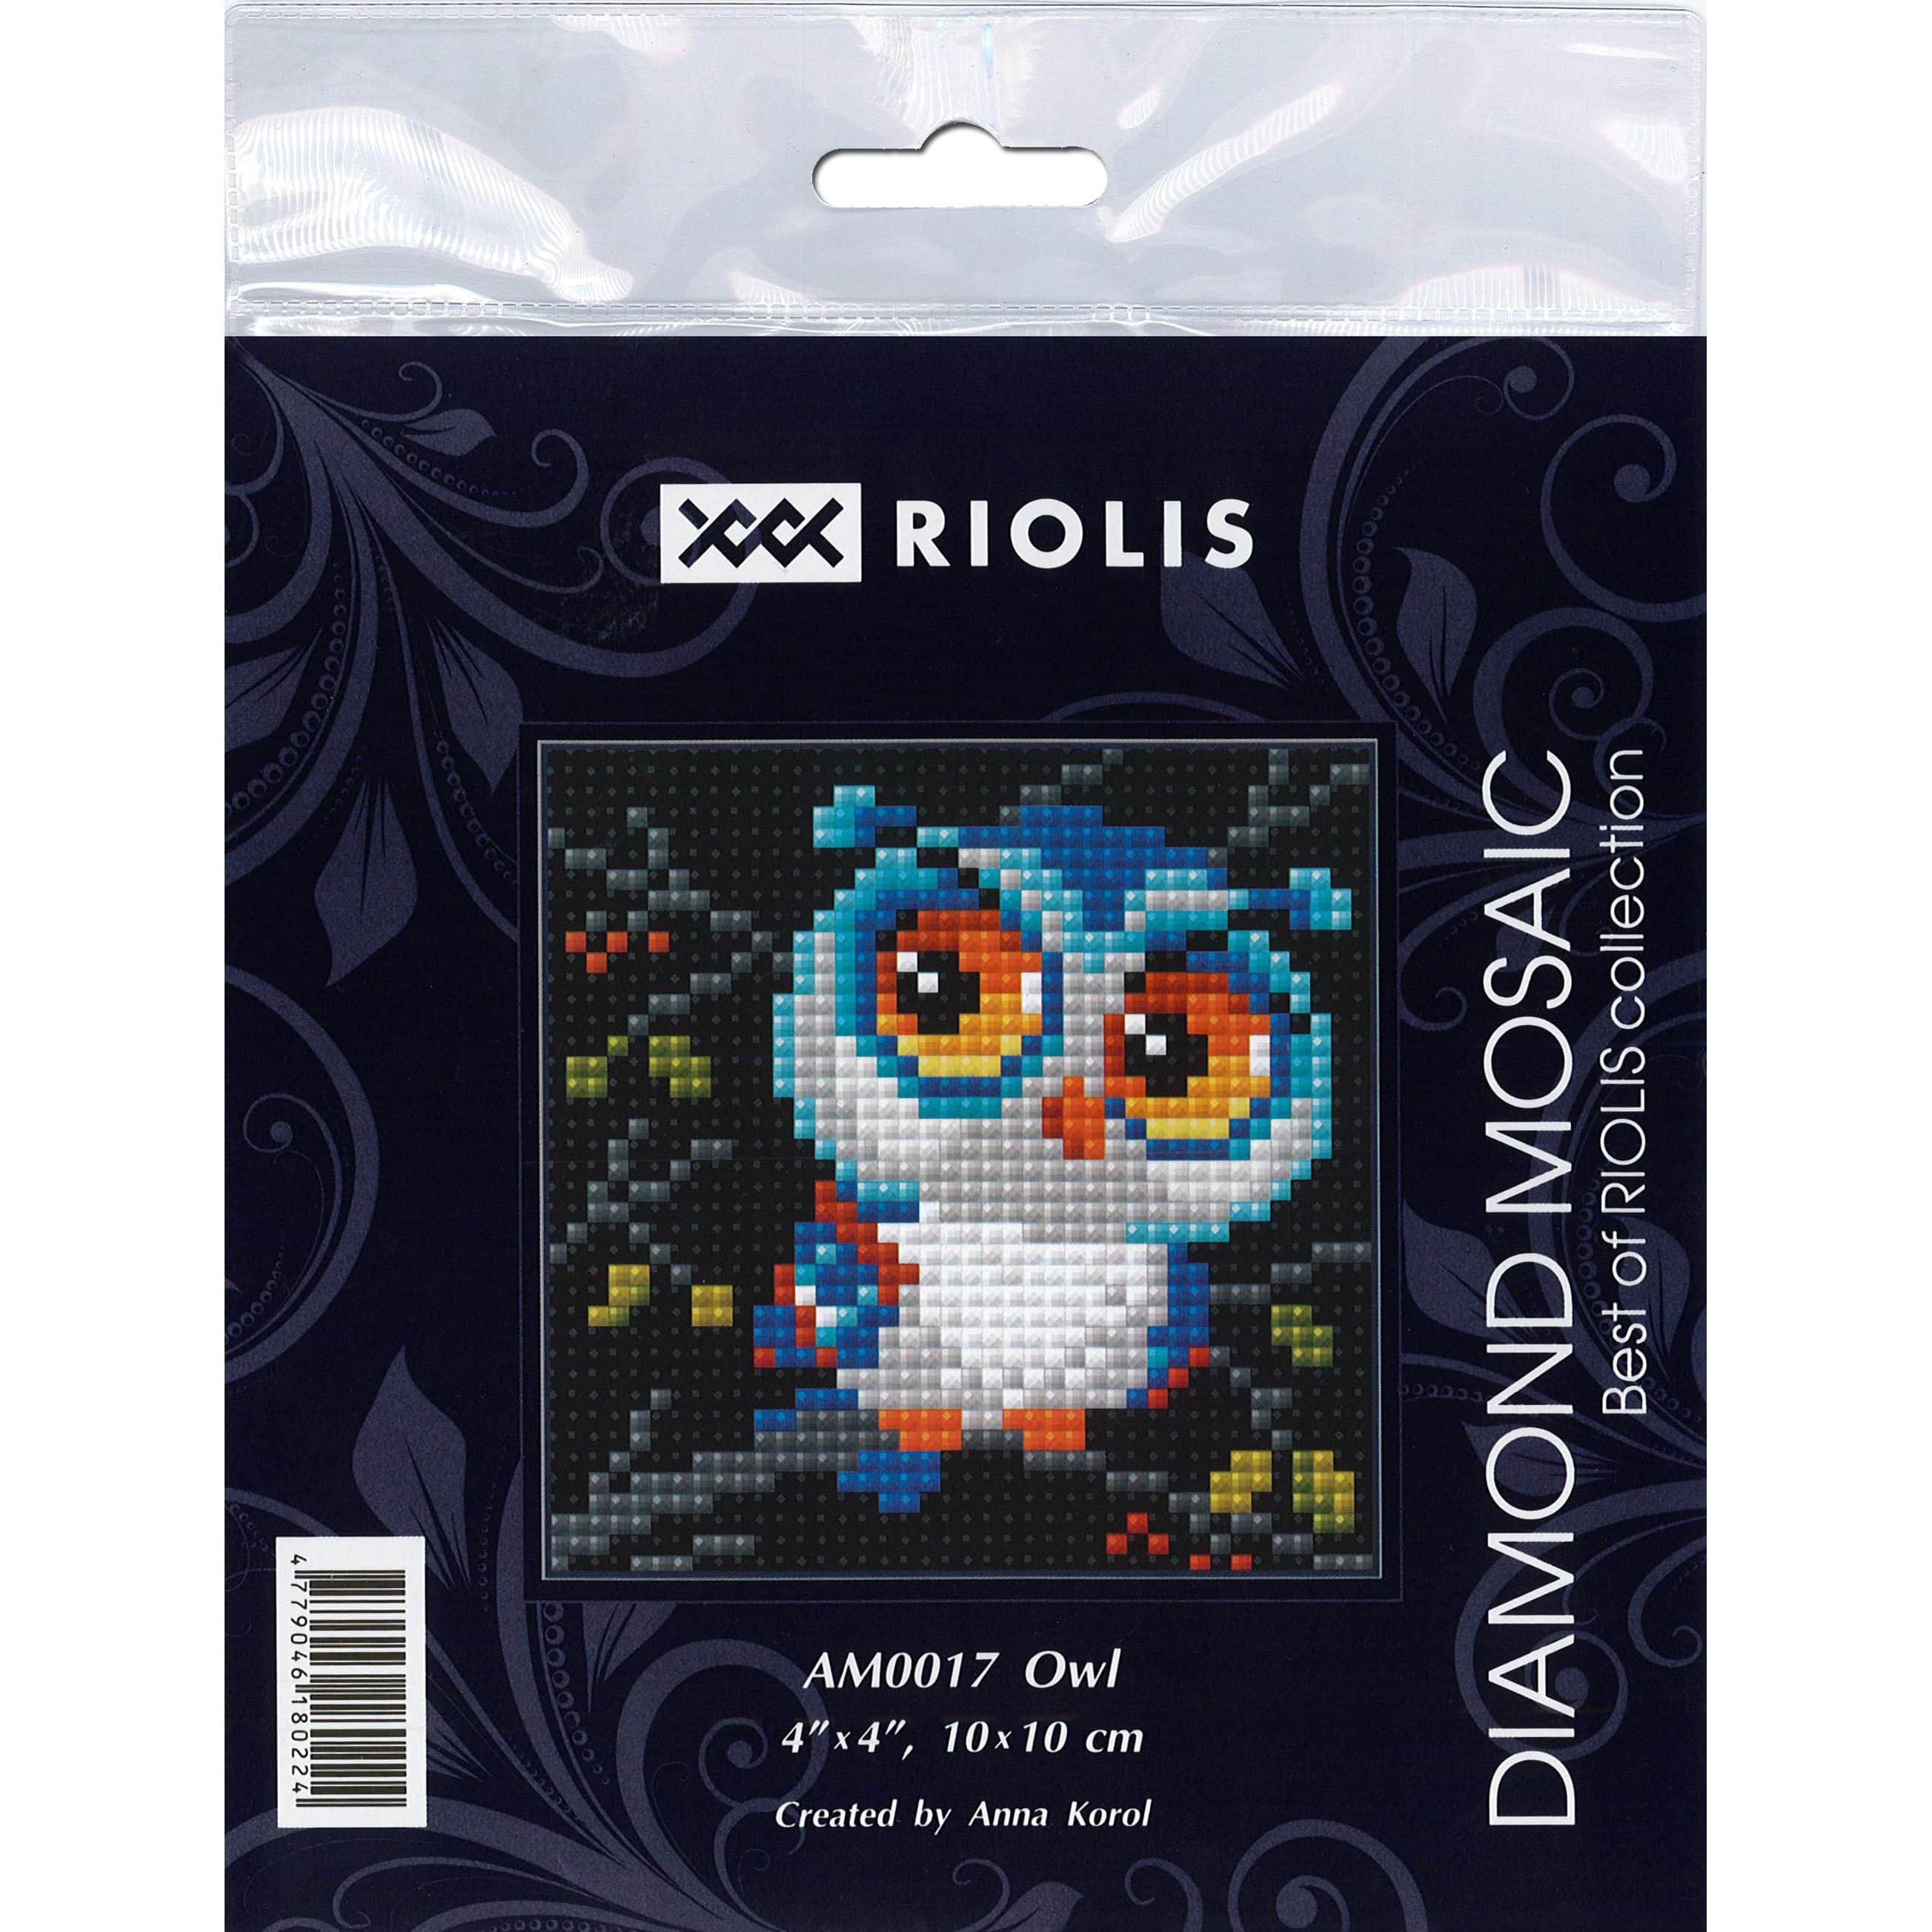 RIOLIS Owl Diamond Mosaic Kit